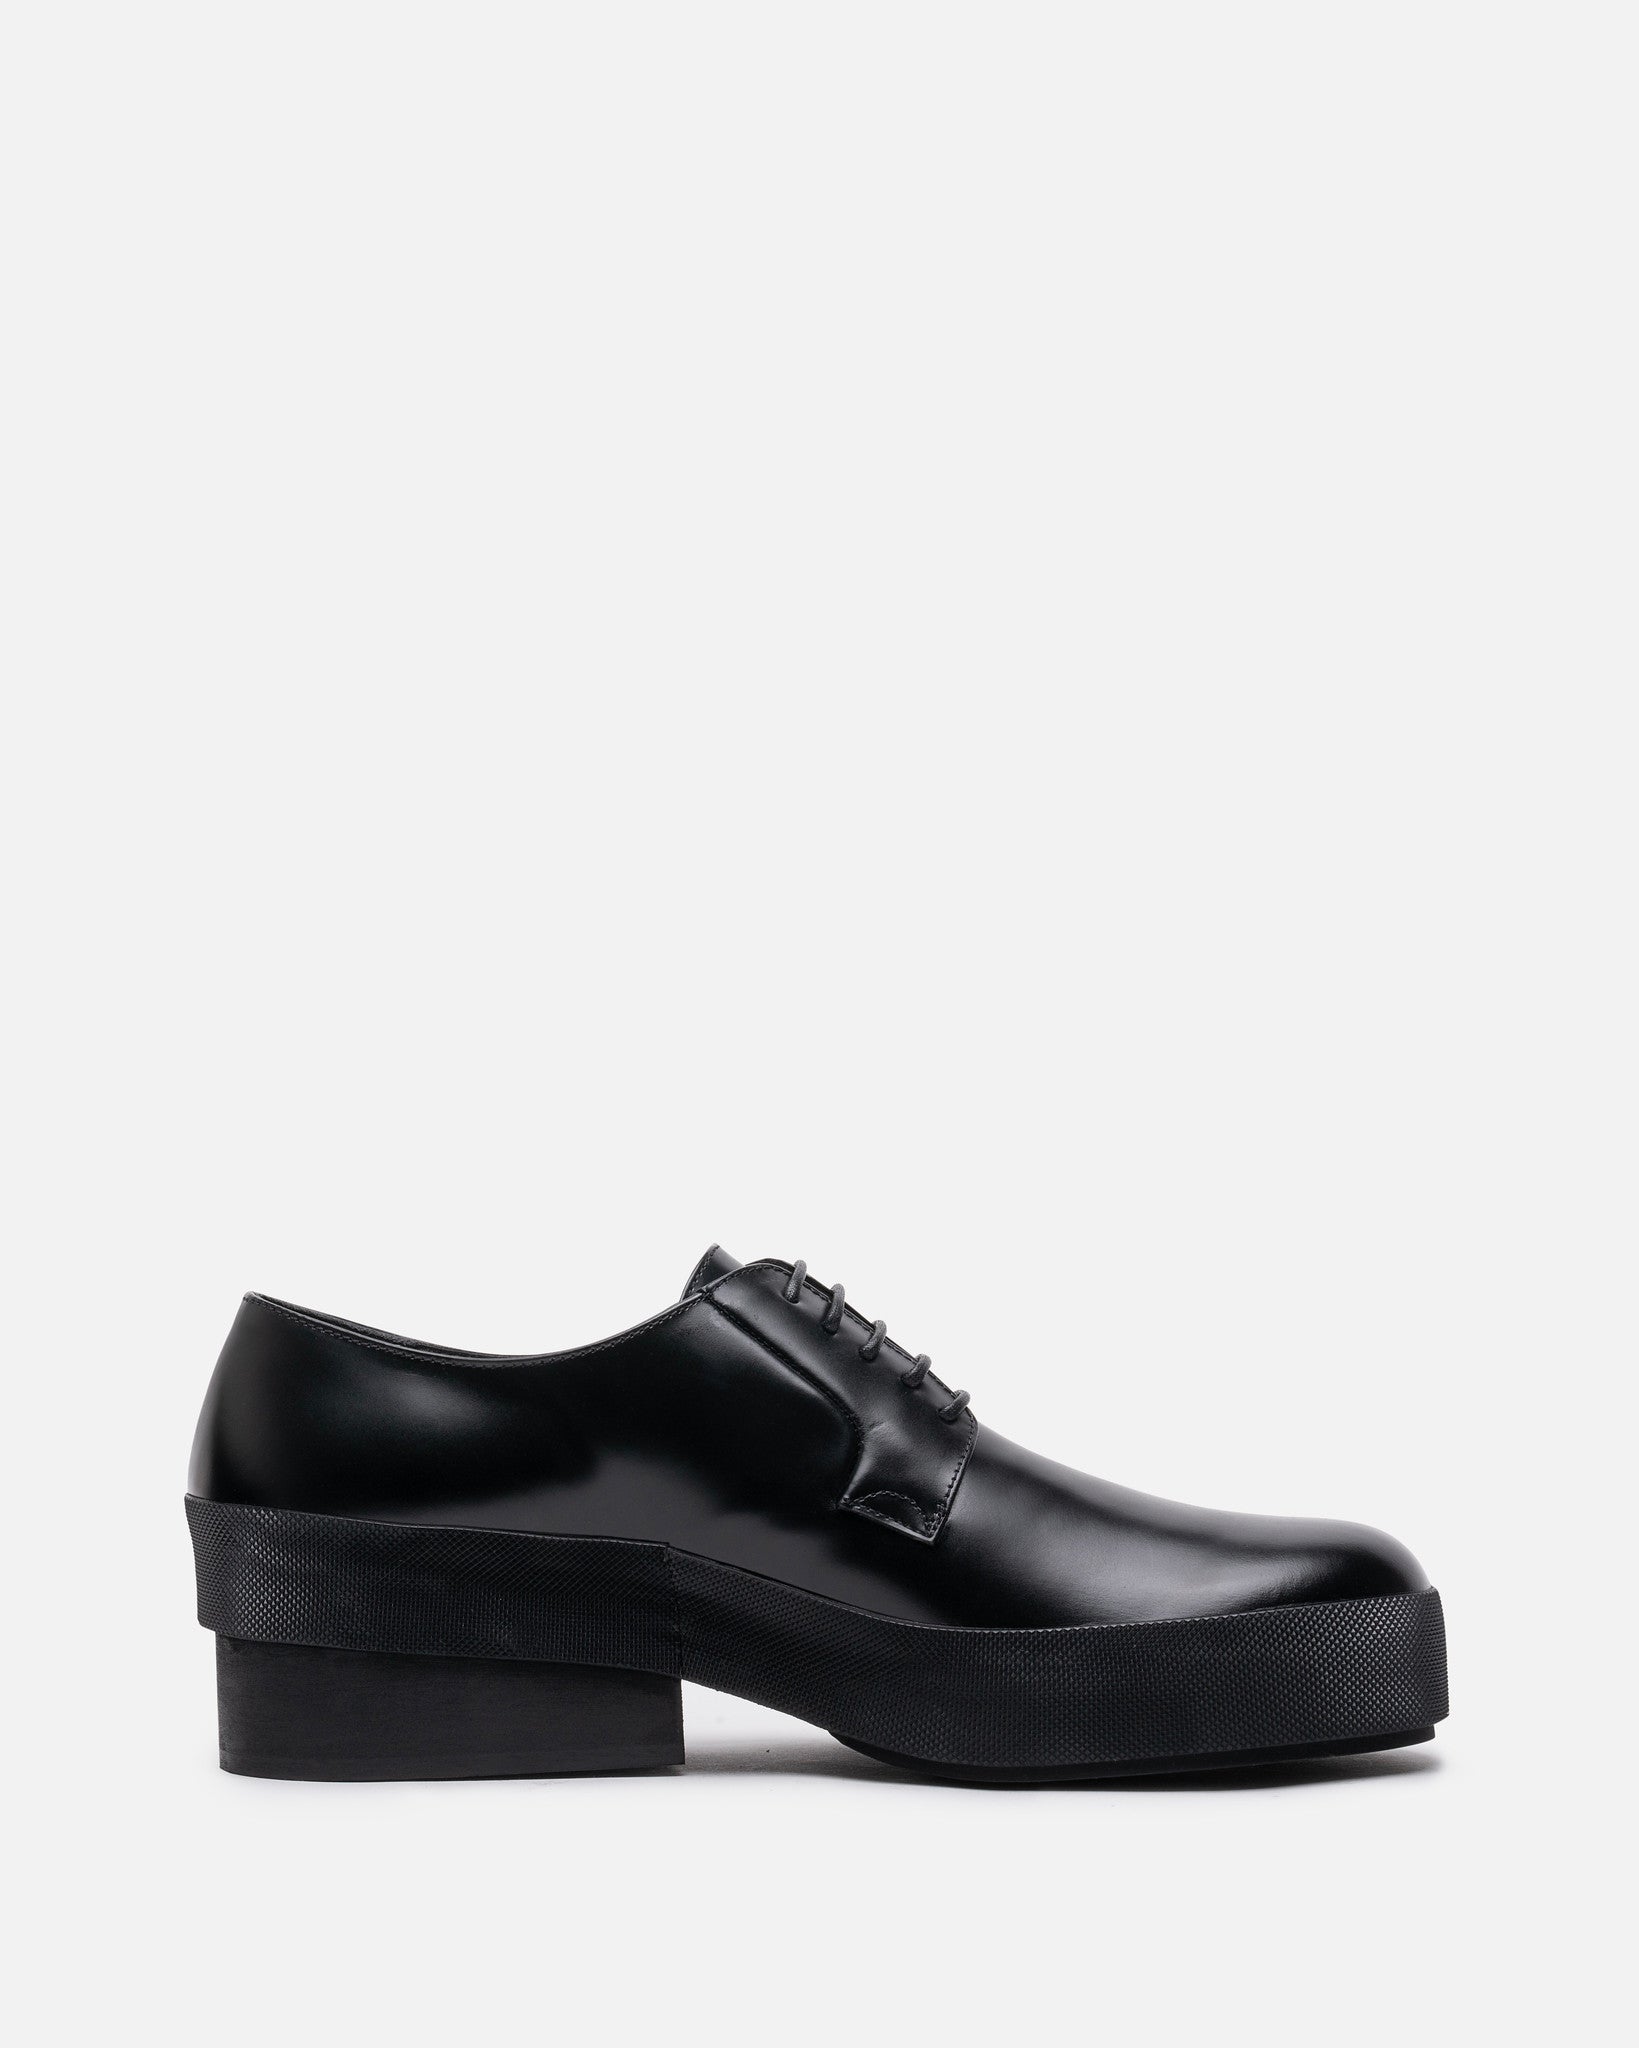 Raf Simons Men's Shoes Block Heel Derby Shoe in Black